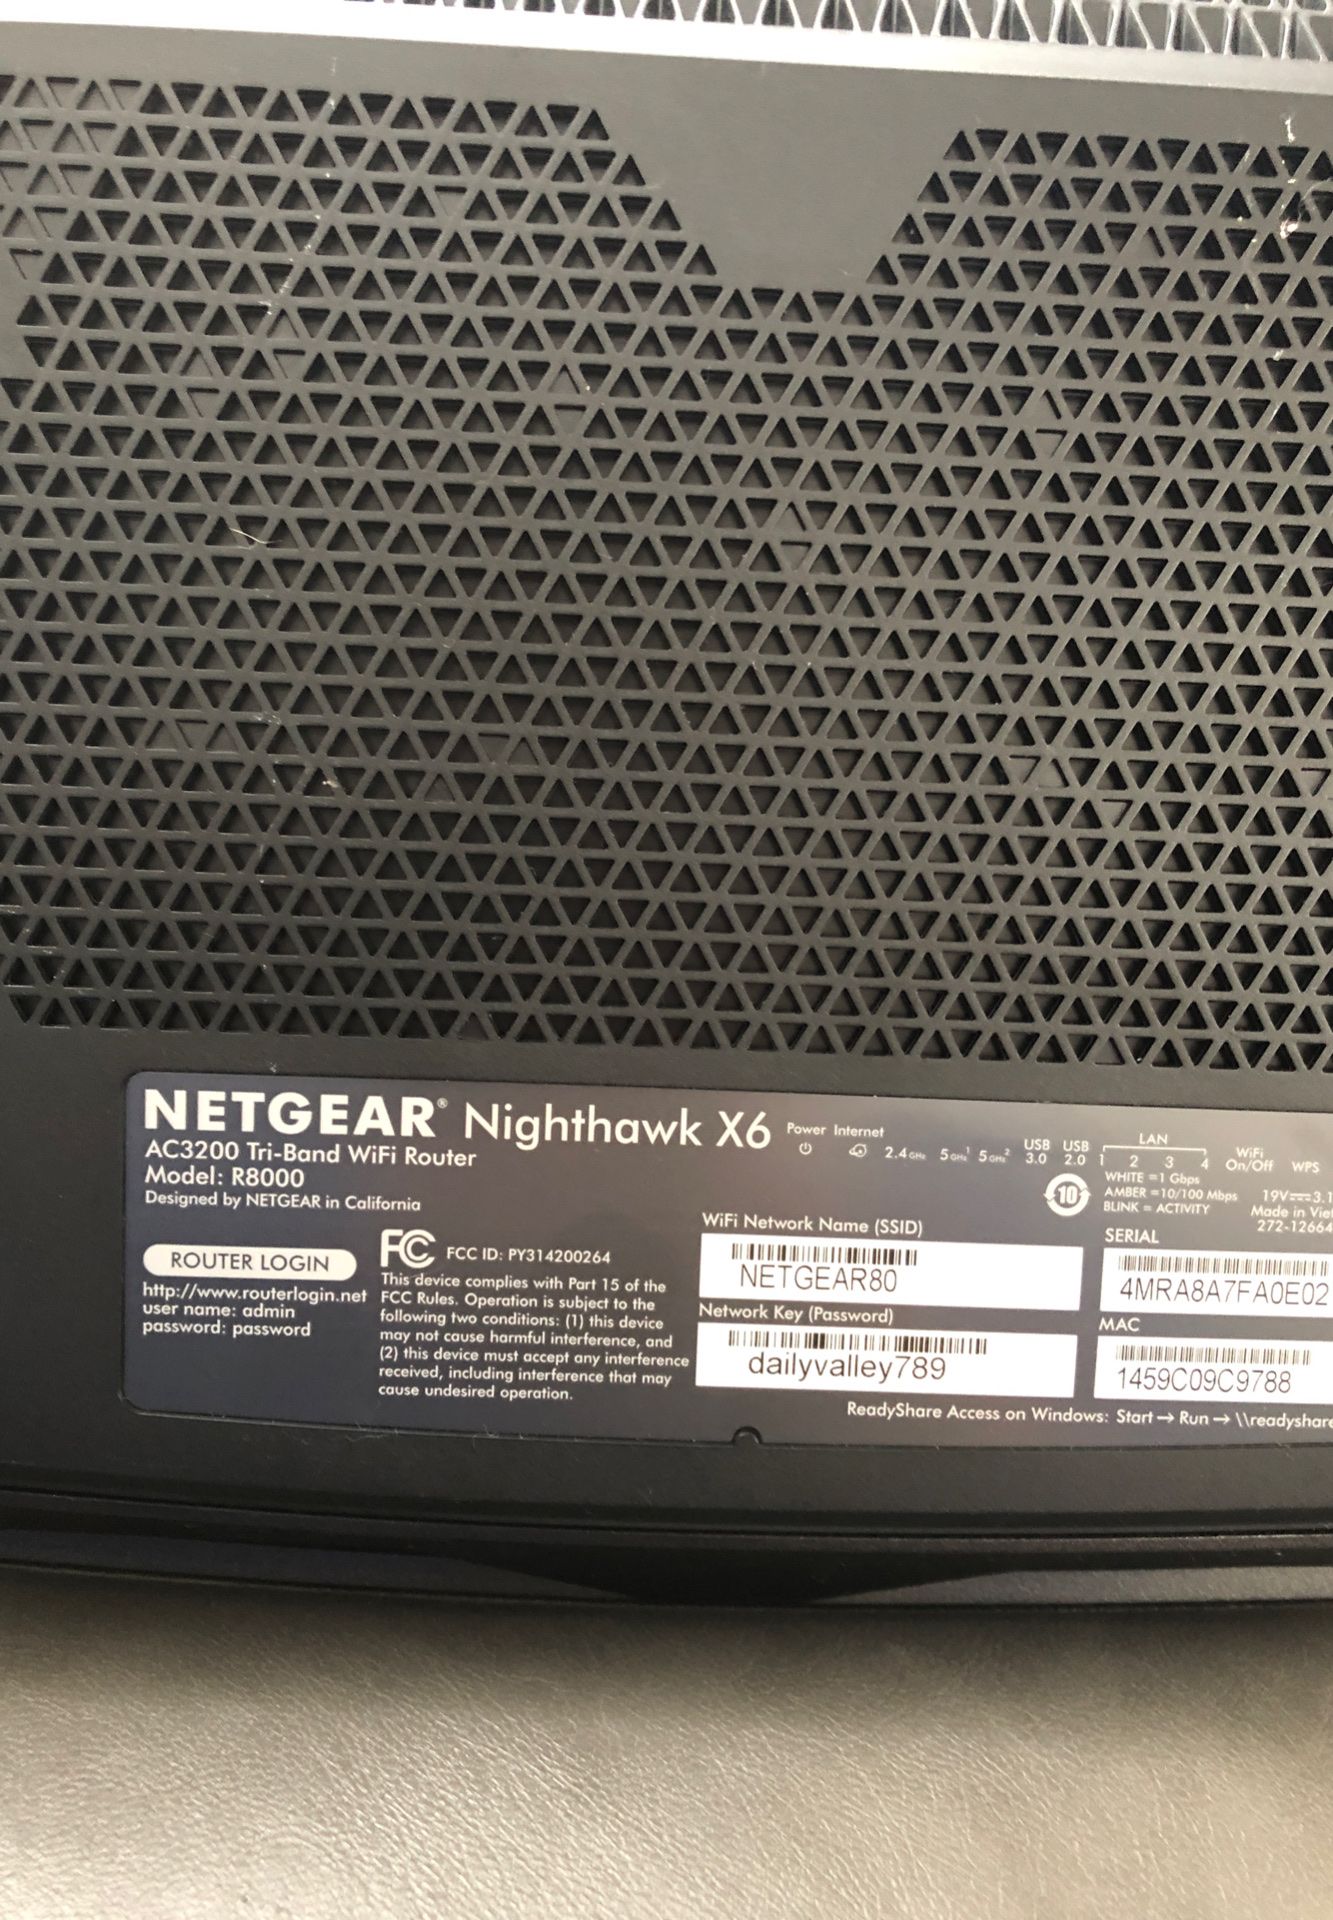 Nighthawk x6 router